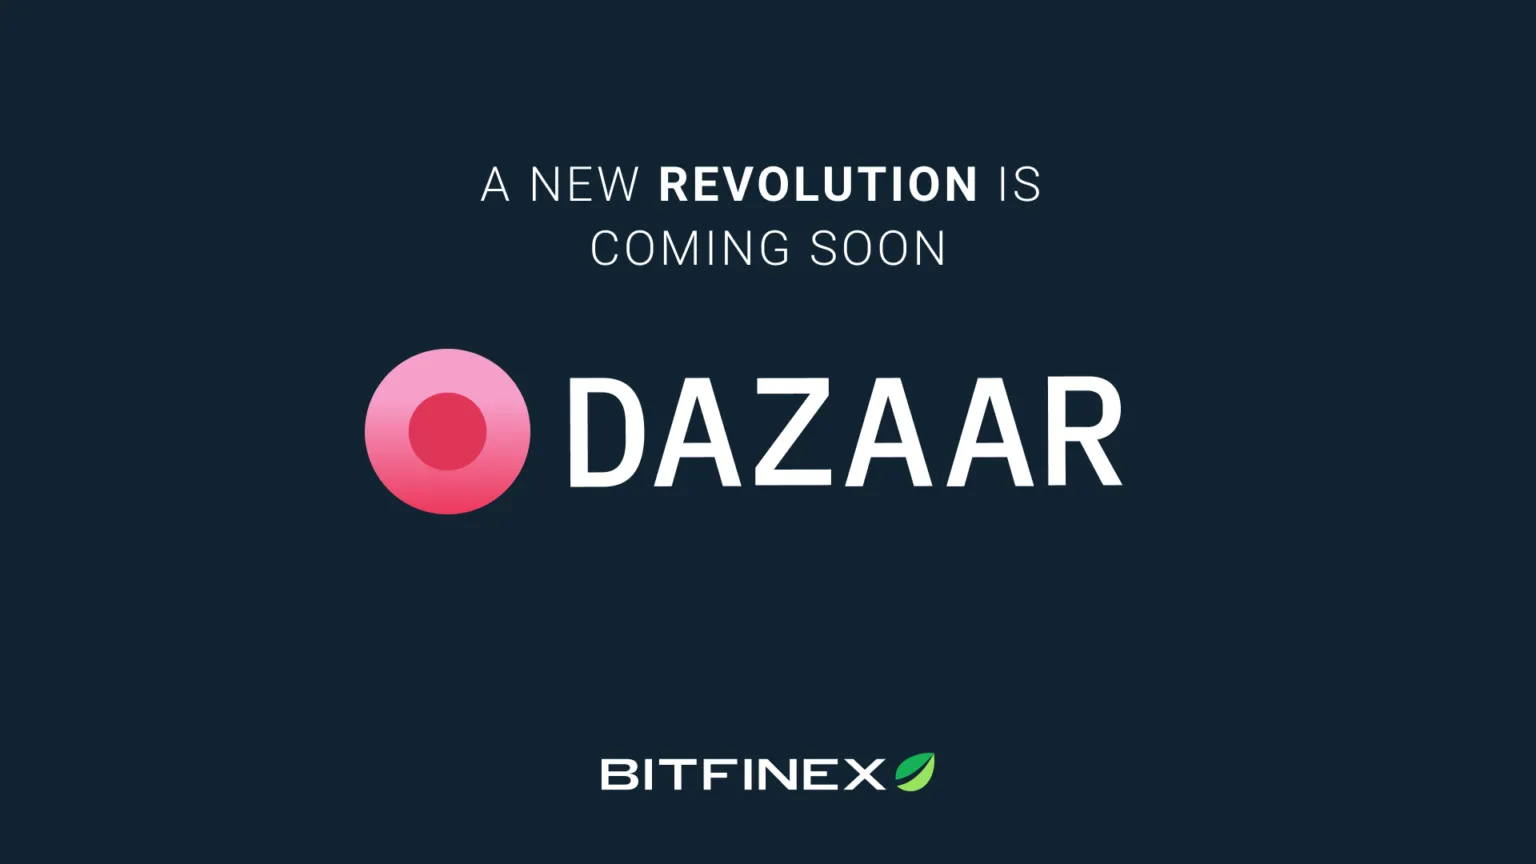 Anuncio de Dazaar en el blog de Bitfinex. Imagen: Bitfinex